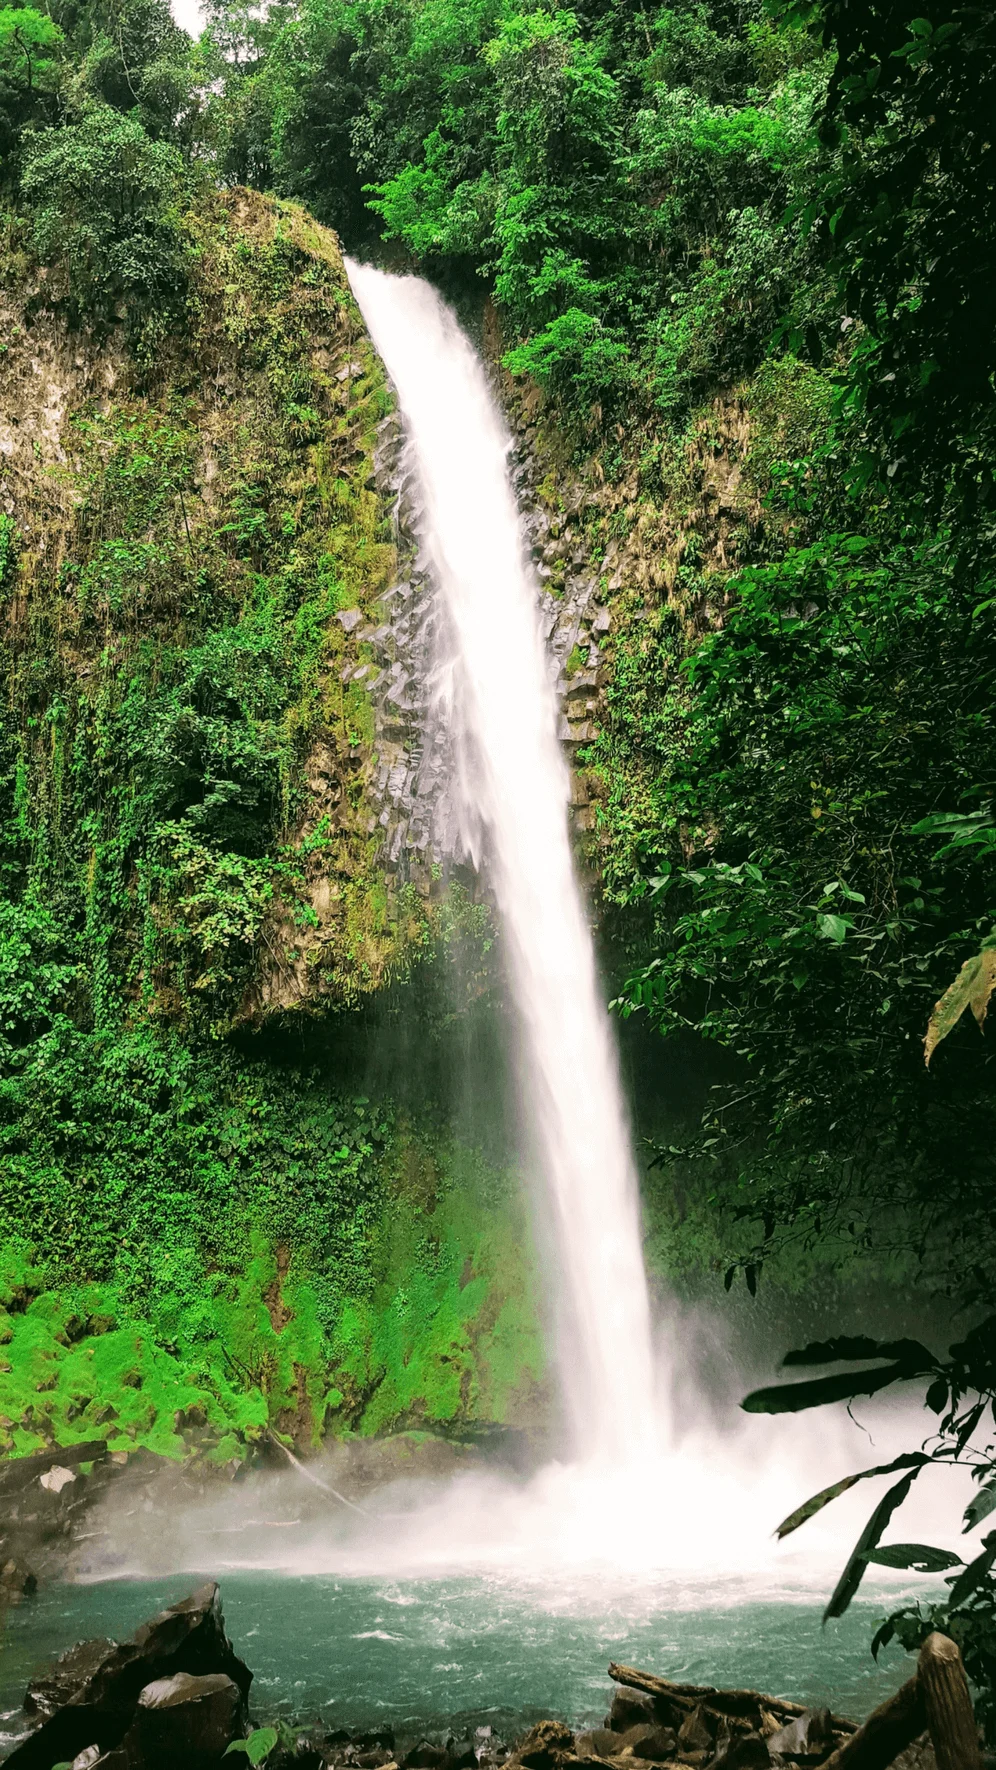 La Fortuna Waterfall, one of the best waterfalls in La Fortuna, Costa Rica